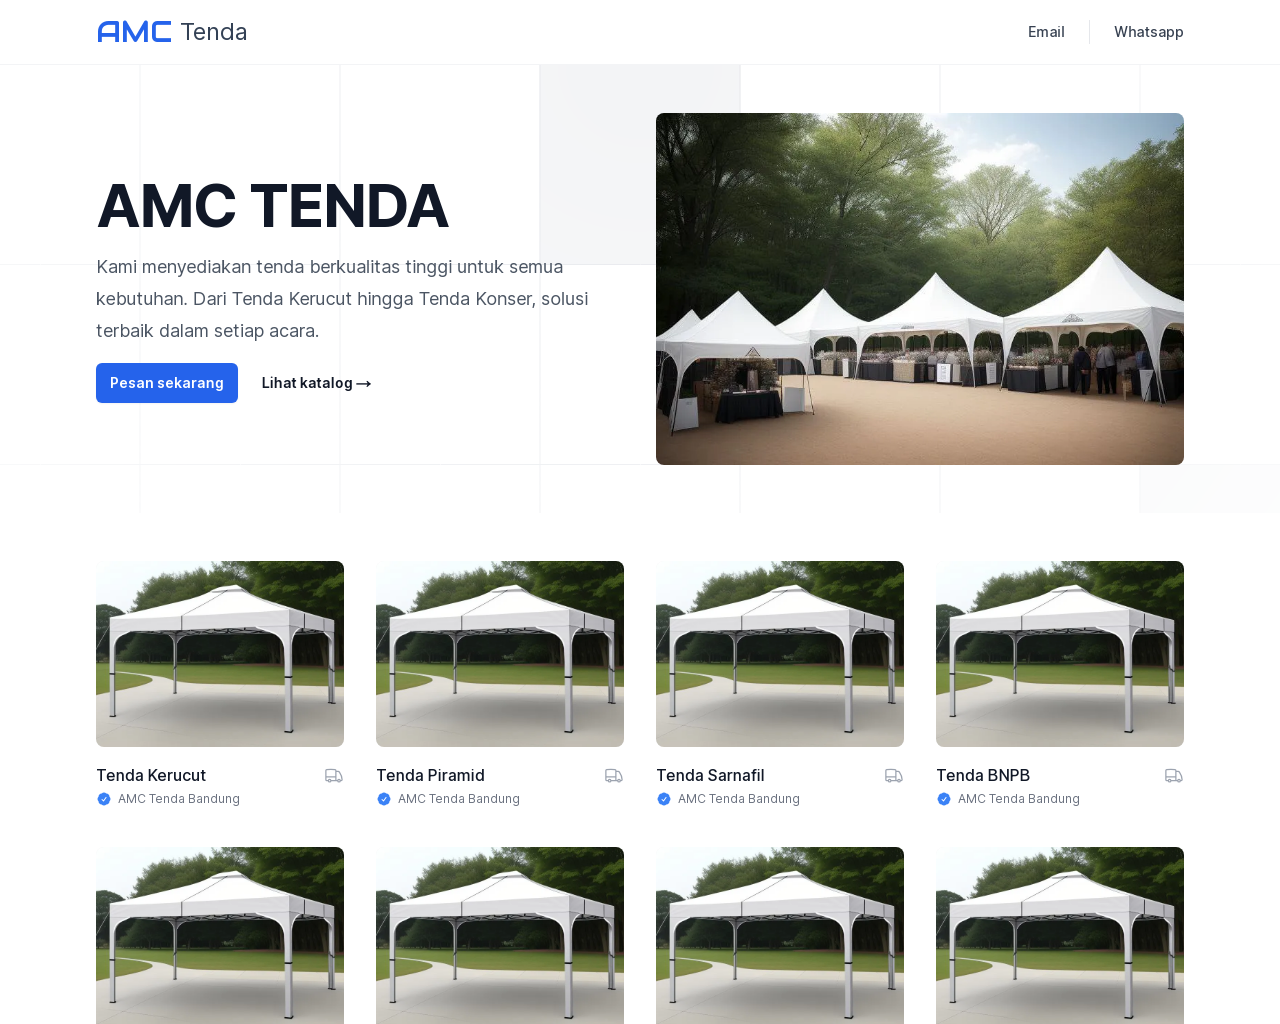 AMC Tenda Bandung